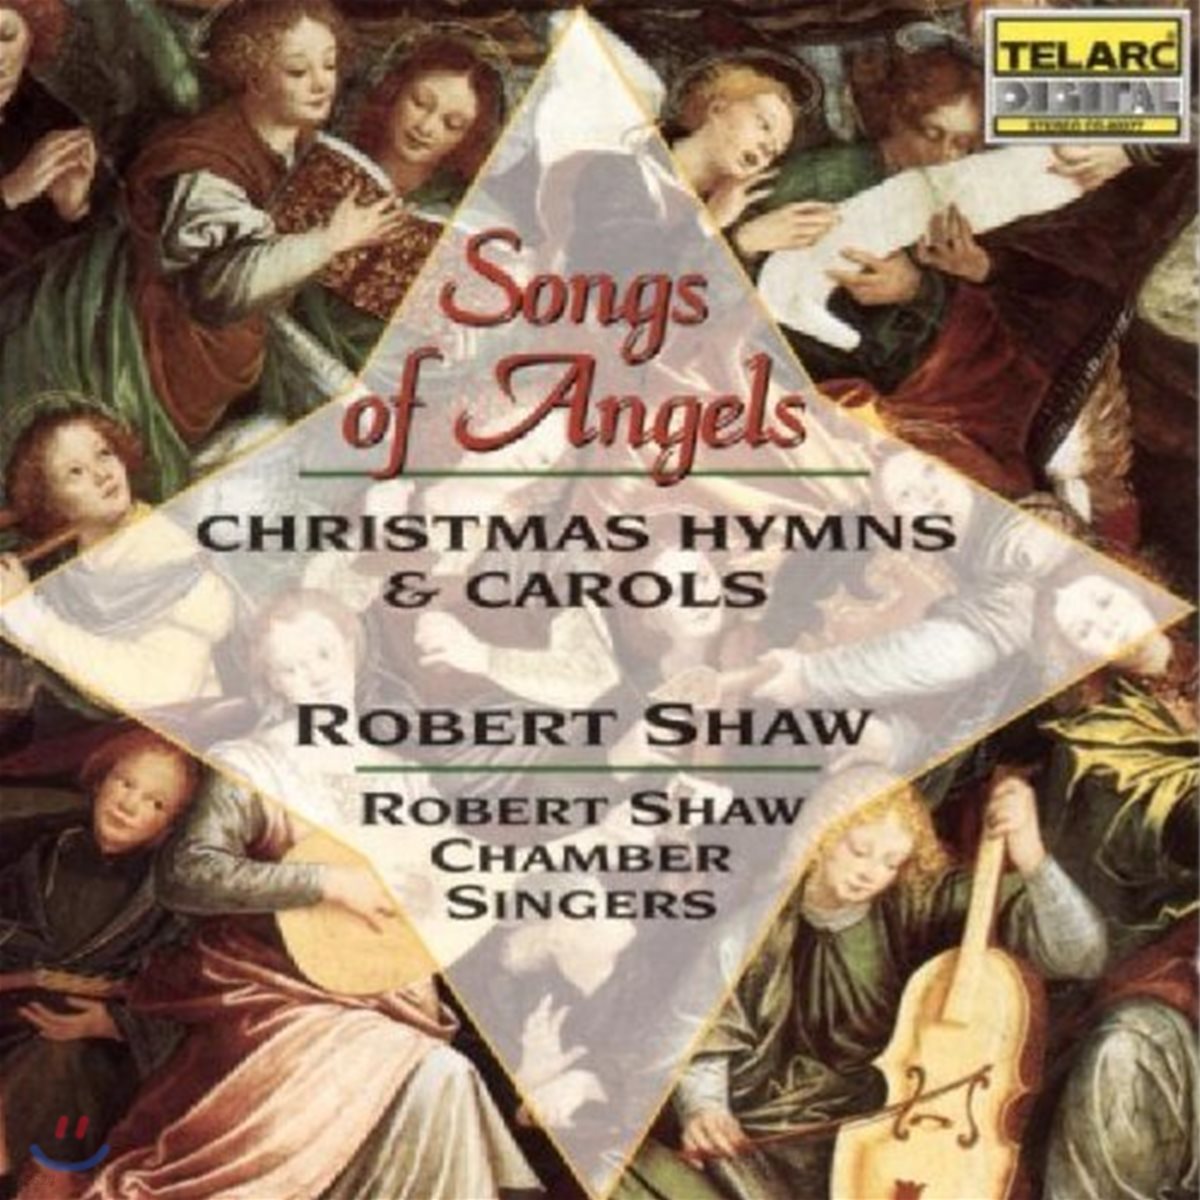 Robert Shaw Chamber Singers 로버트 쇼우 합창 - 천사의 노래, 크리스마스 찬송, 캐롤 (Songs of Angels - Christmas Hymns &amp; Carols)